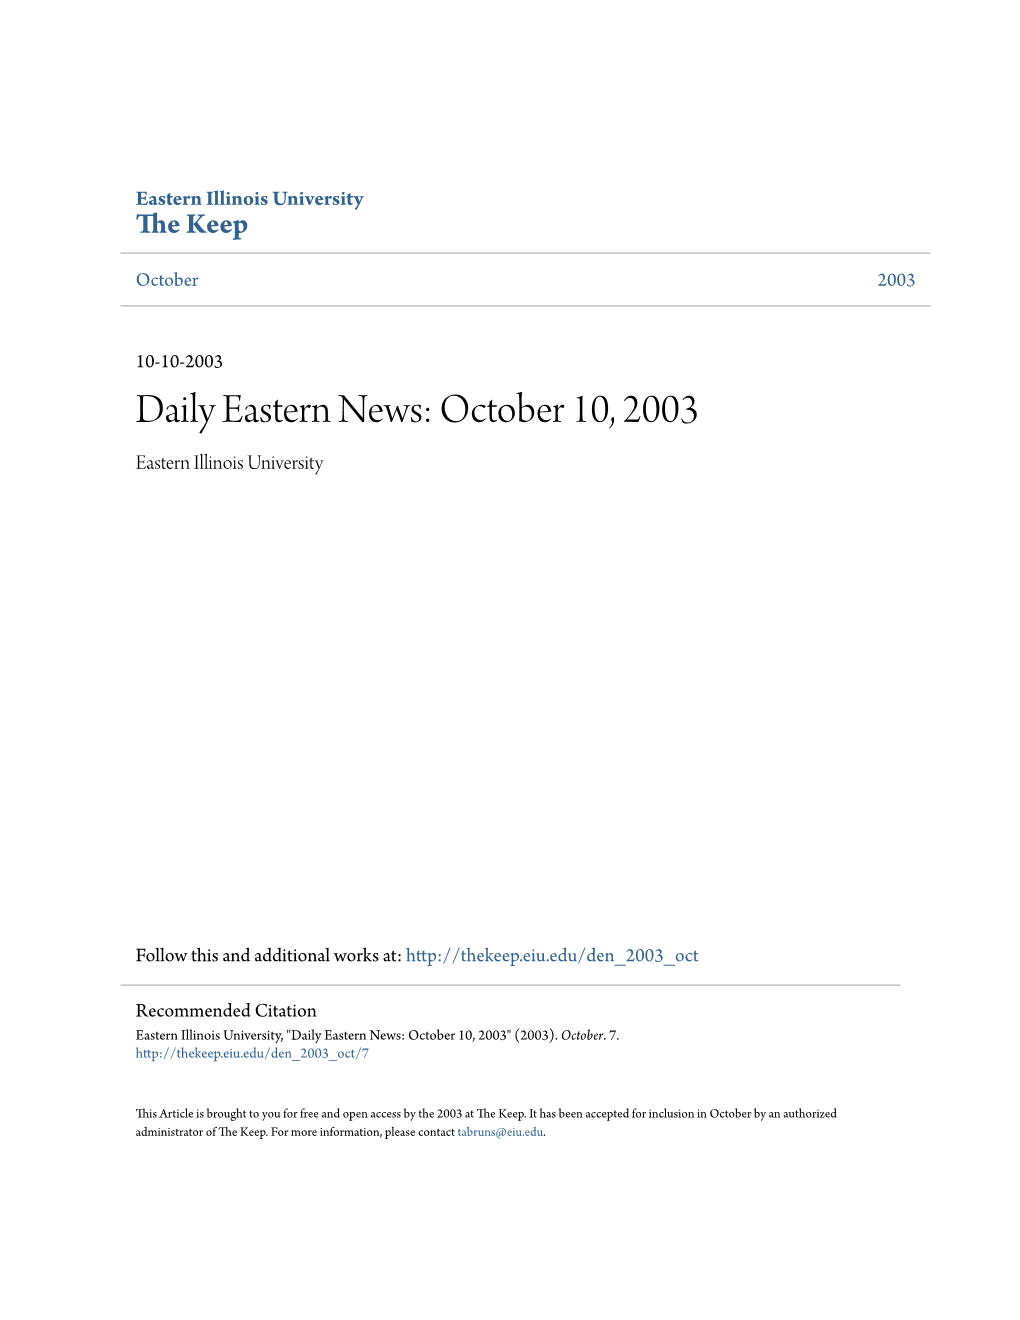 Daily Eastern News: October 10, 2003 Eastern Illinois University